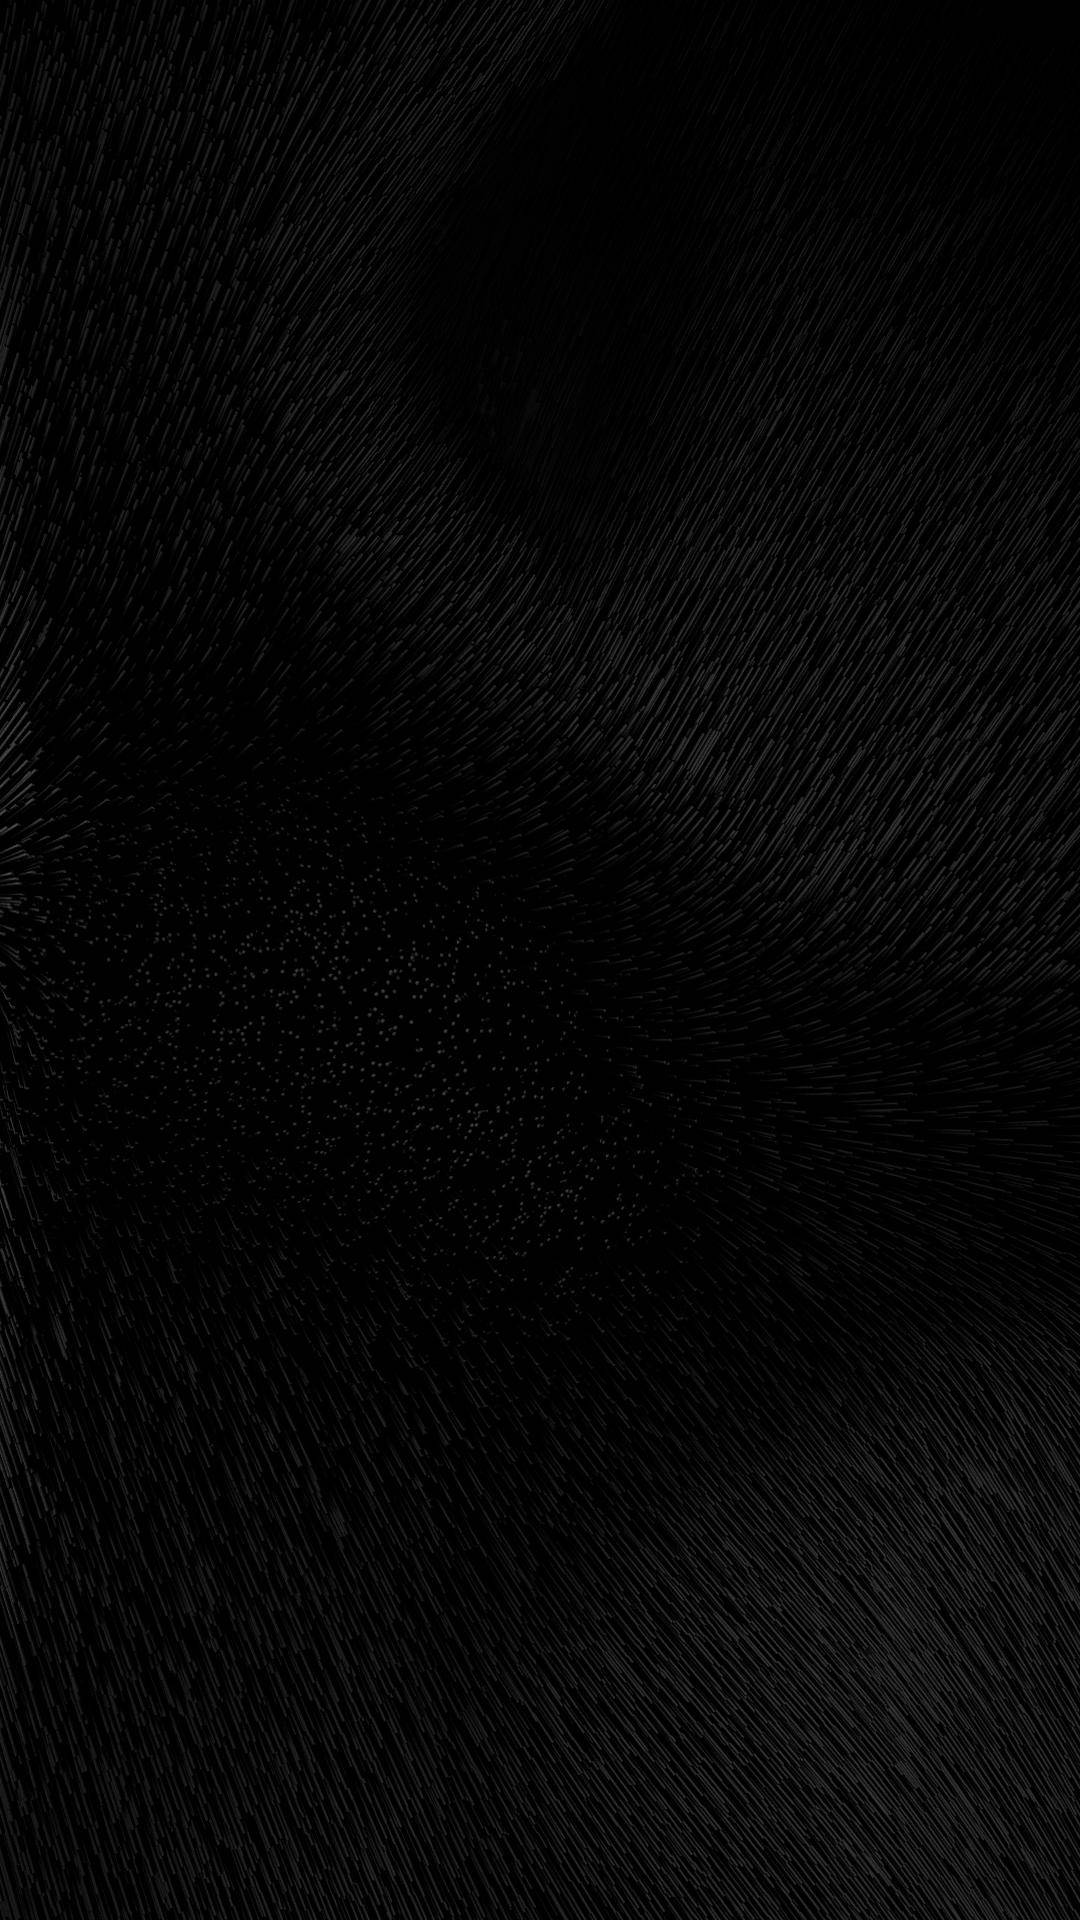 Plain Black With Fur Pattern Background